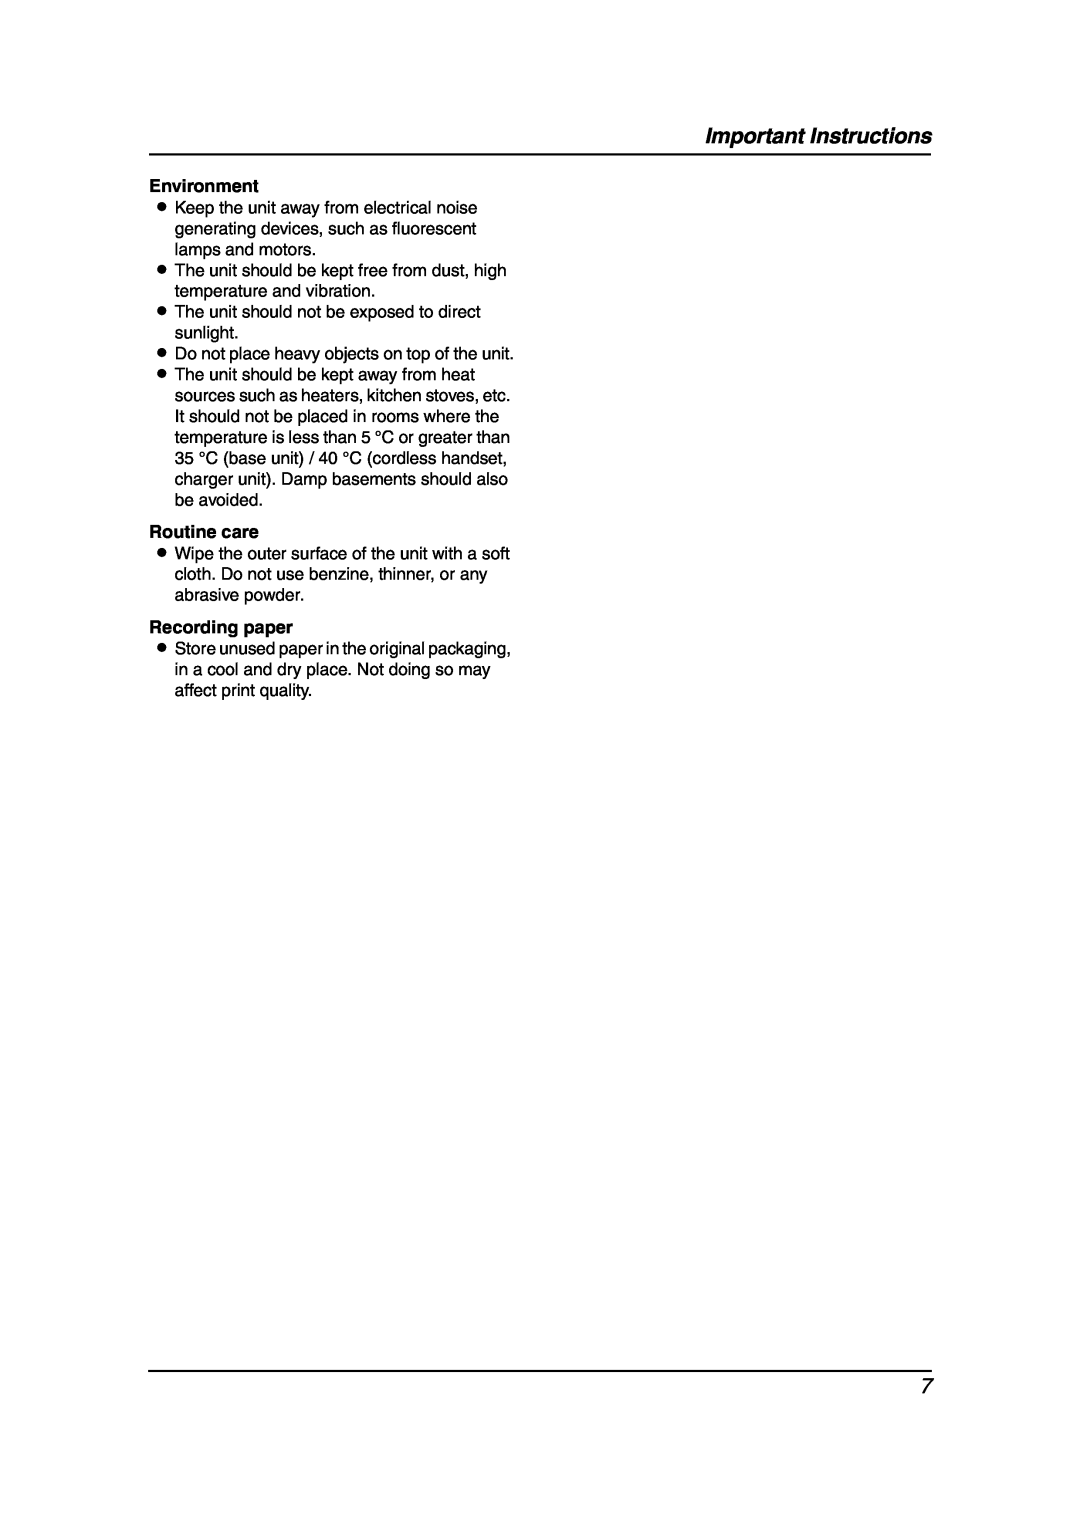 Panasonic KX-FC241AL manual Environment, Routine care, Recording paper, Important Instructions 